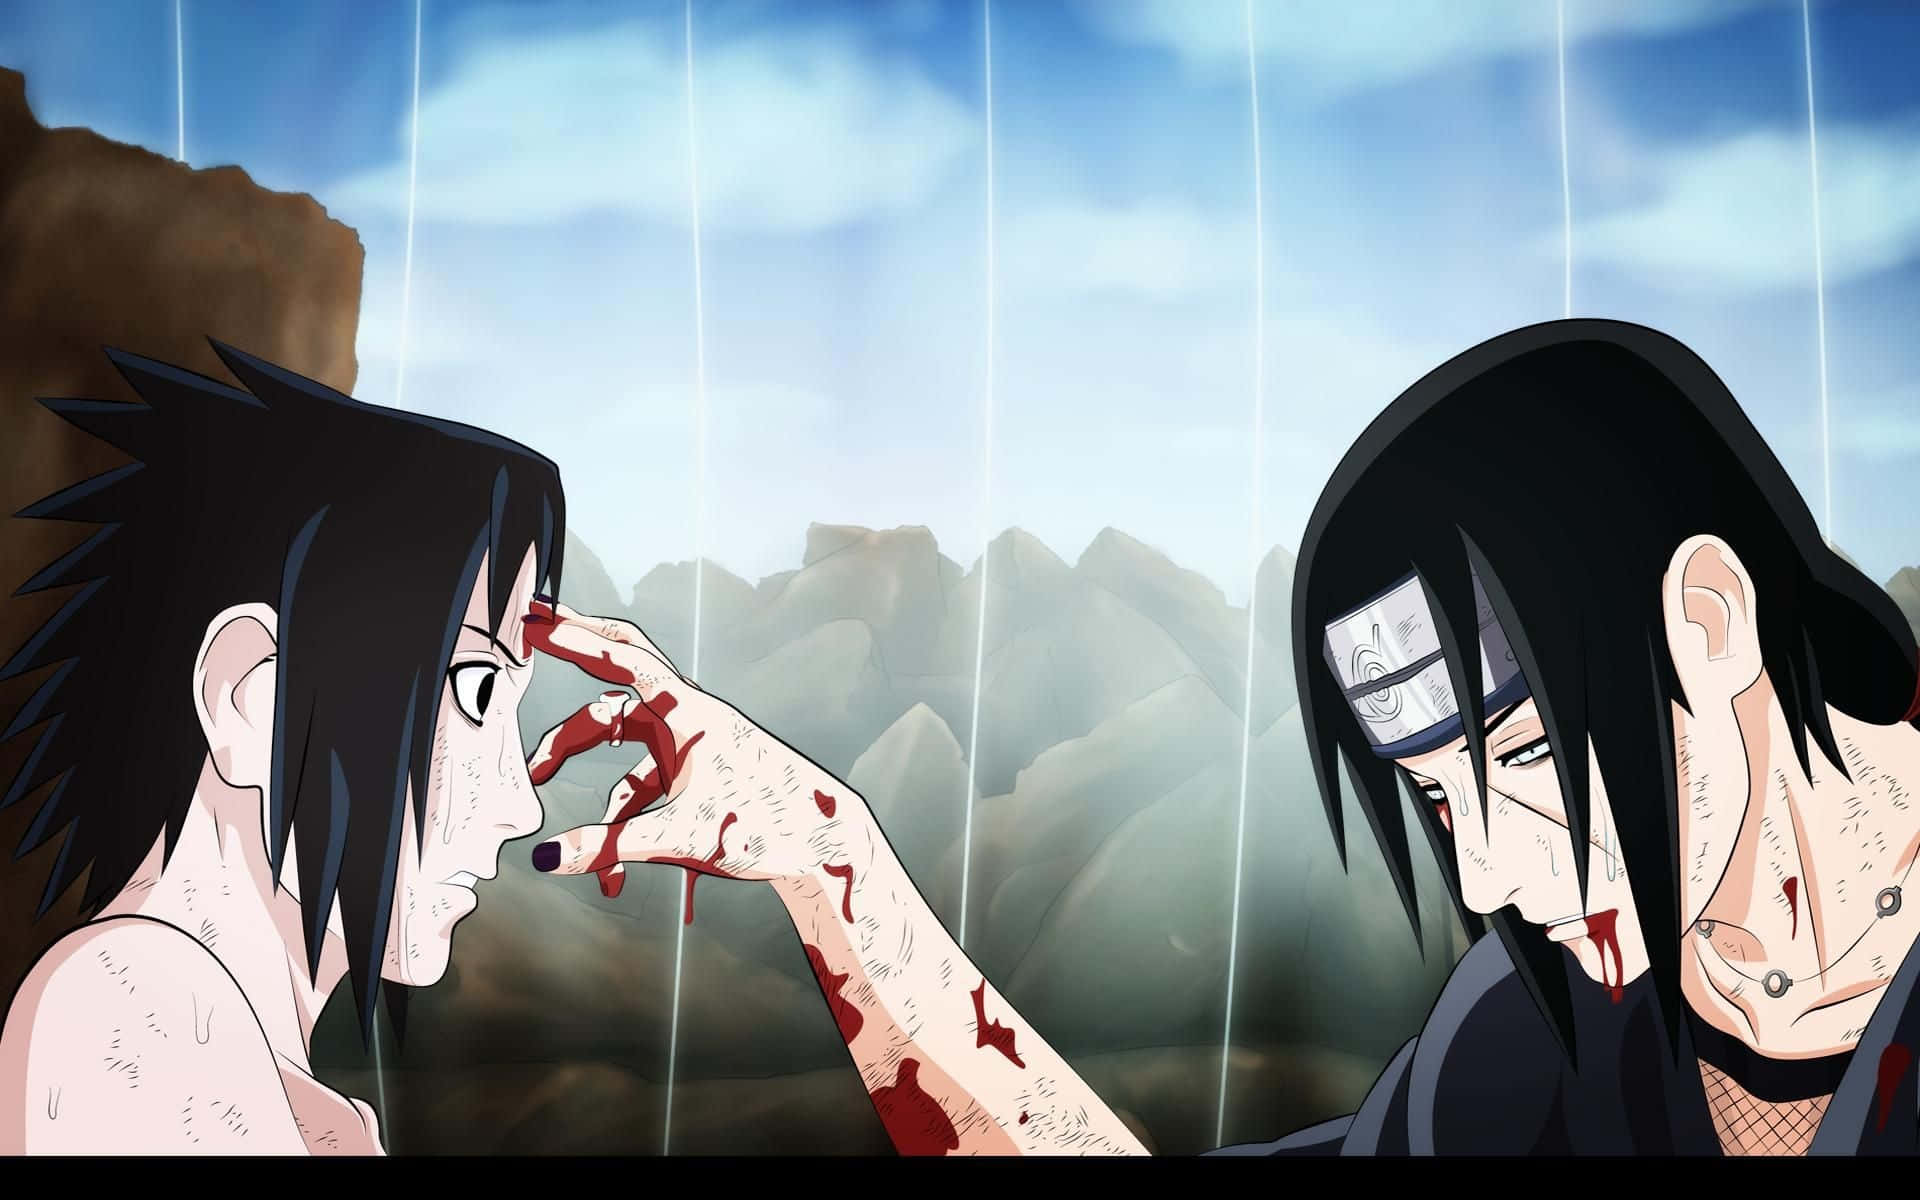 A Moment of Reflection between Naruto Uzumaki and Sasuke Uchiha